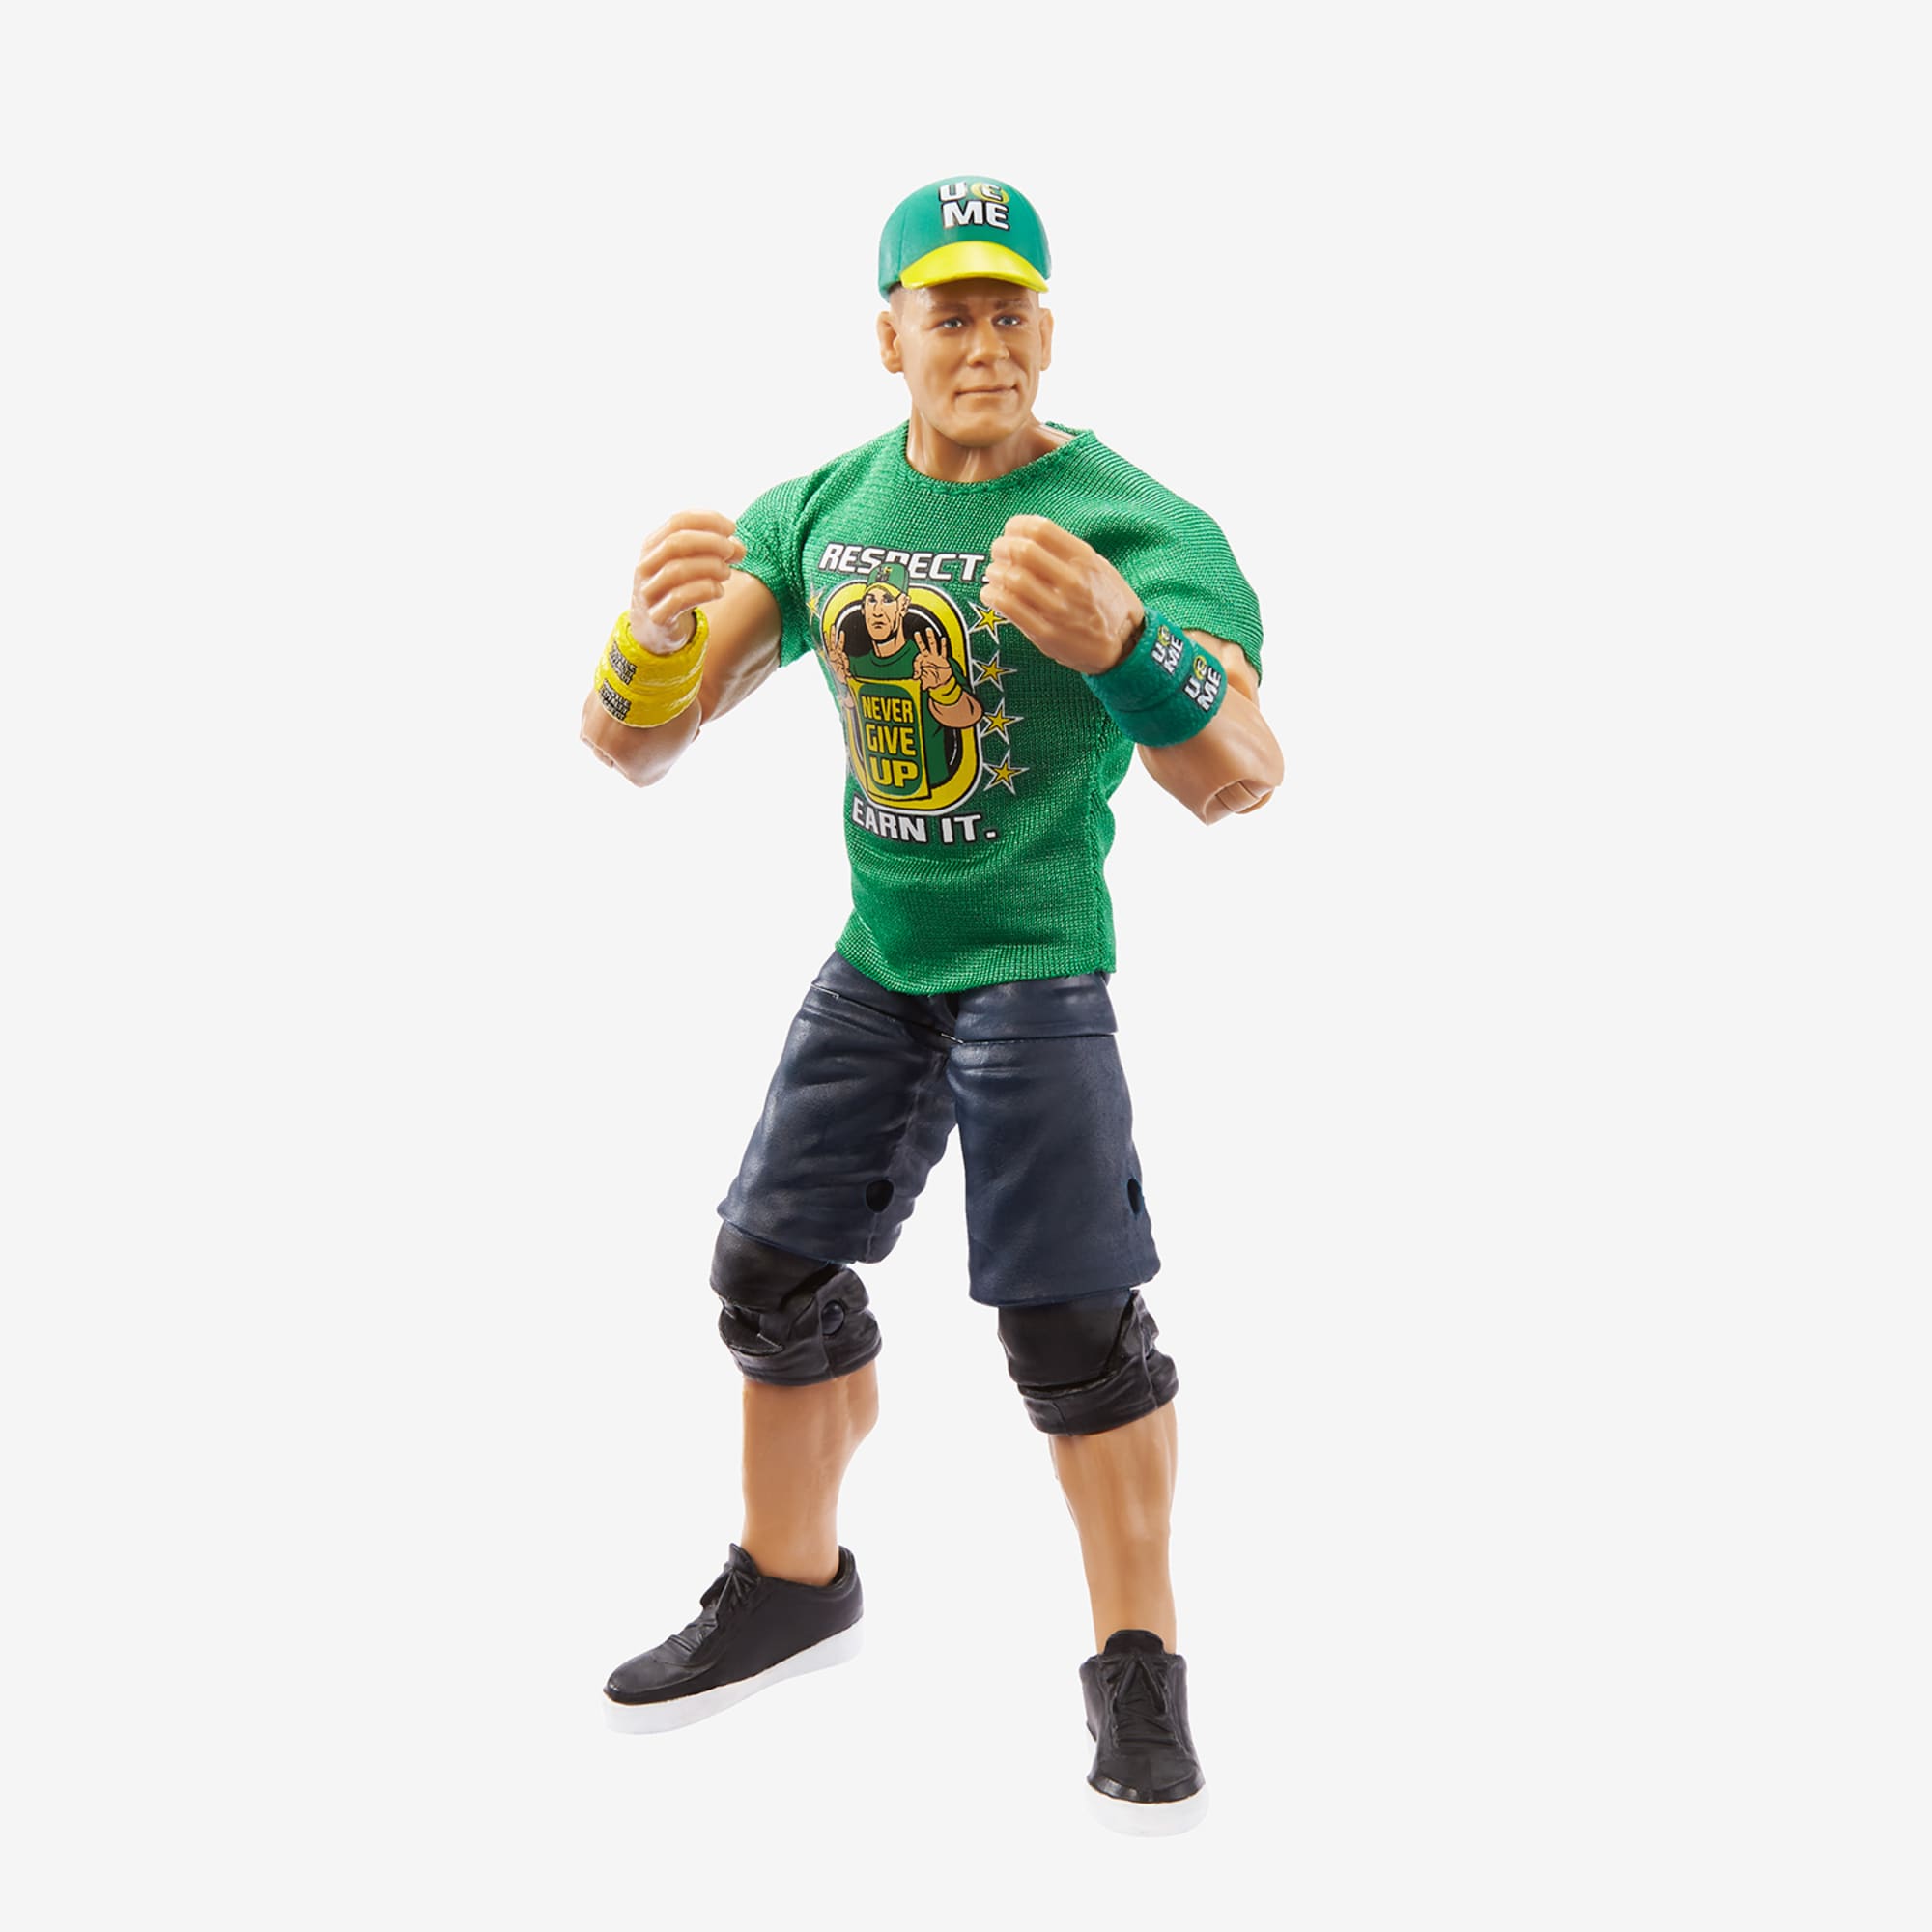 WWE John Cena Elite Collection Action Figure